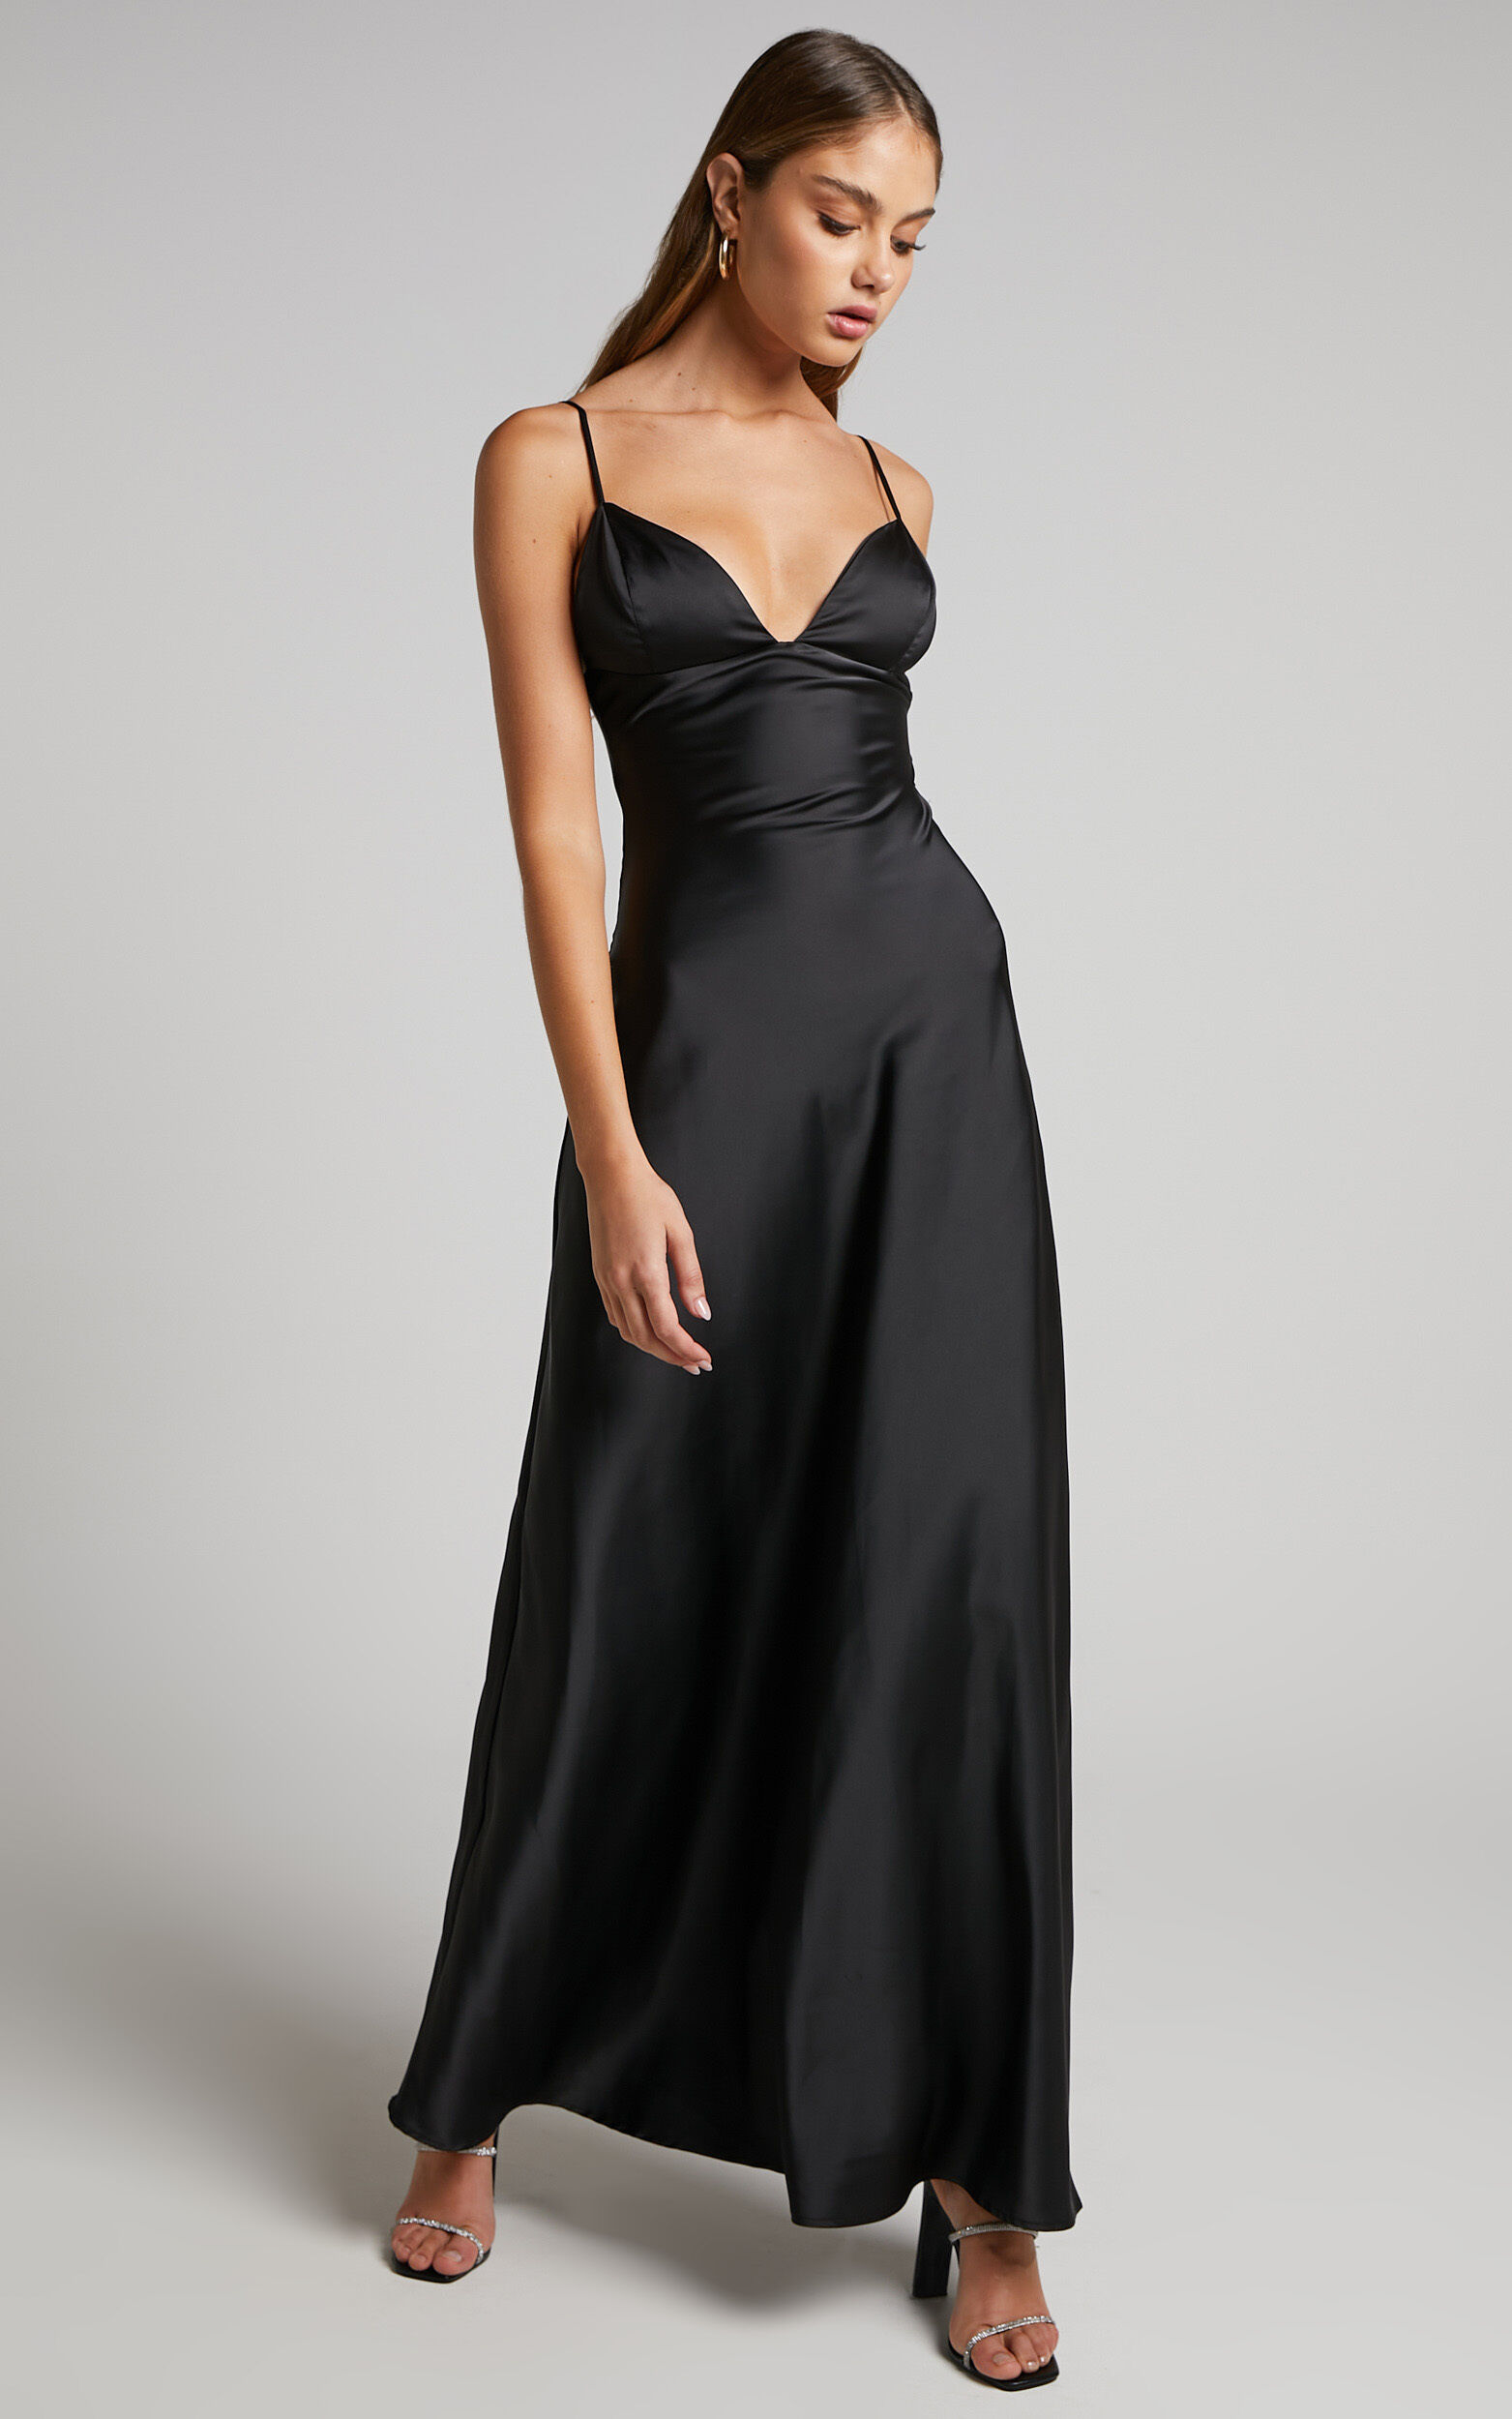 Cariela Midaxi Dress - Plunge Neck Satin Dress in Black - 04, BLK1